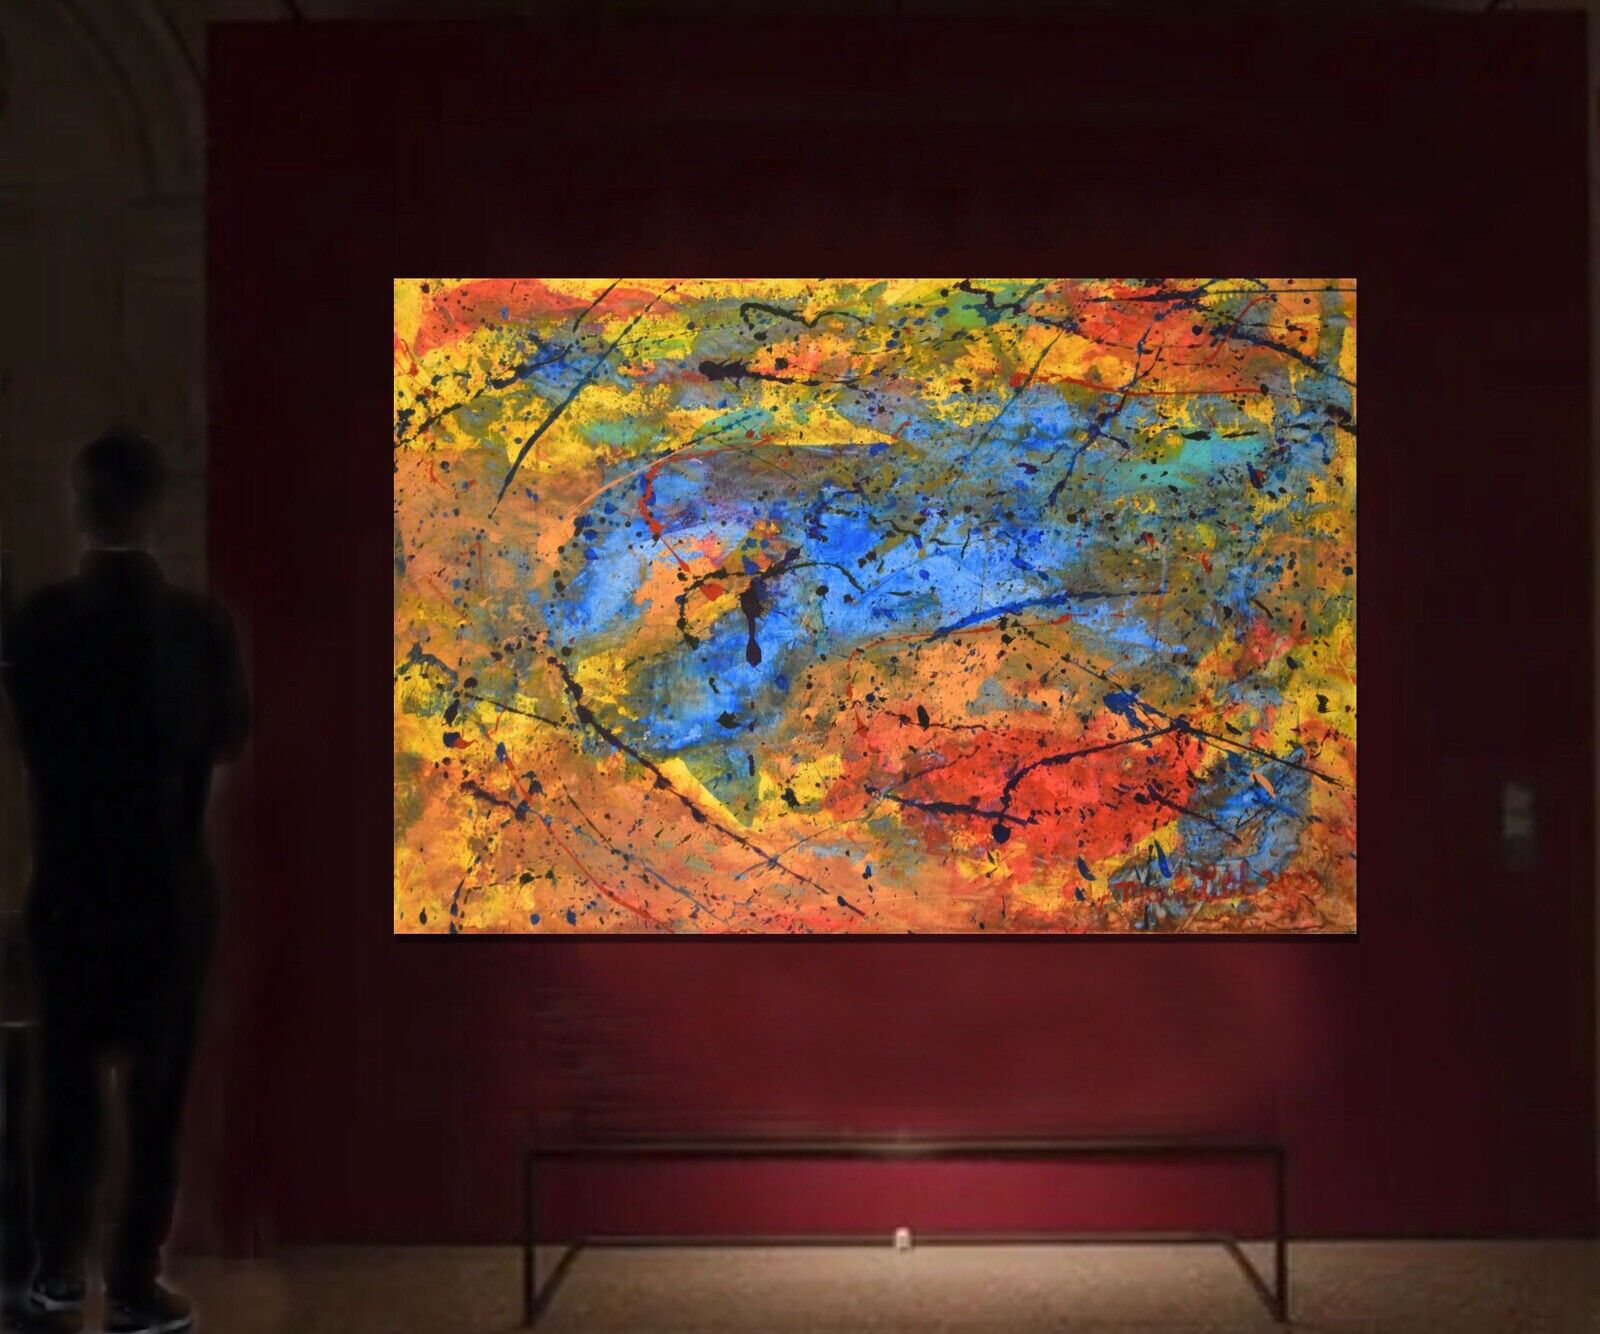 64”X44” Pollock/Richter style canvas ￼painting Acrylic,Abstract, Modern,X Large Без бренда - фотография #5